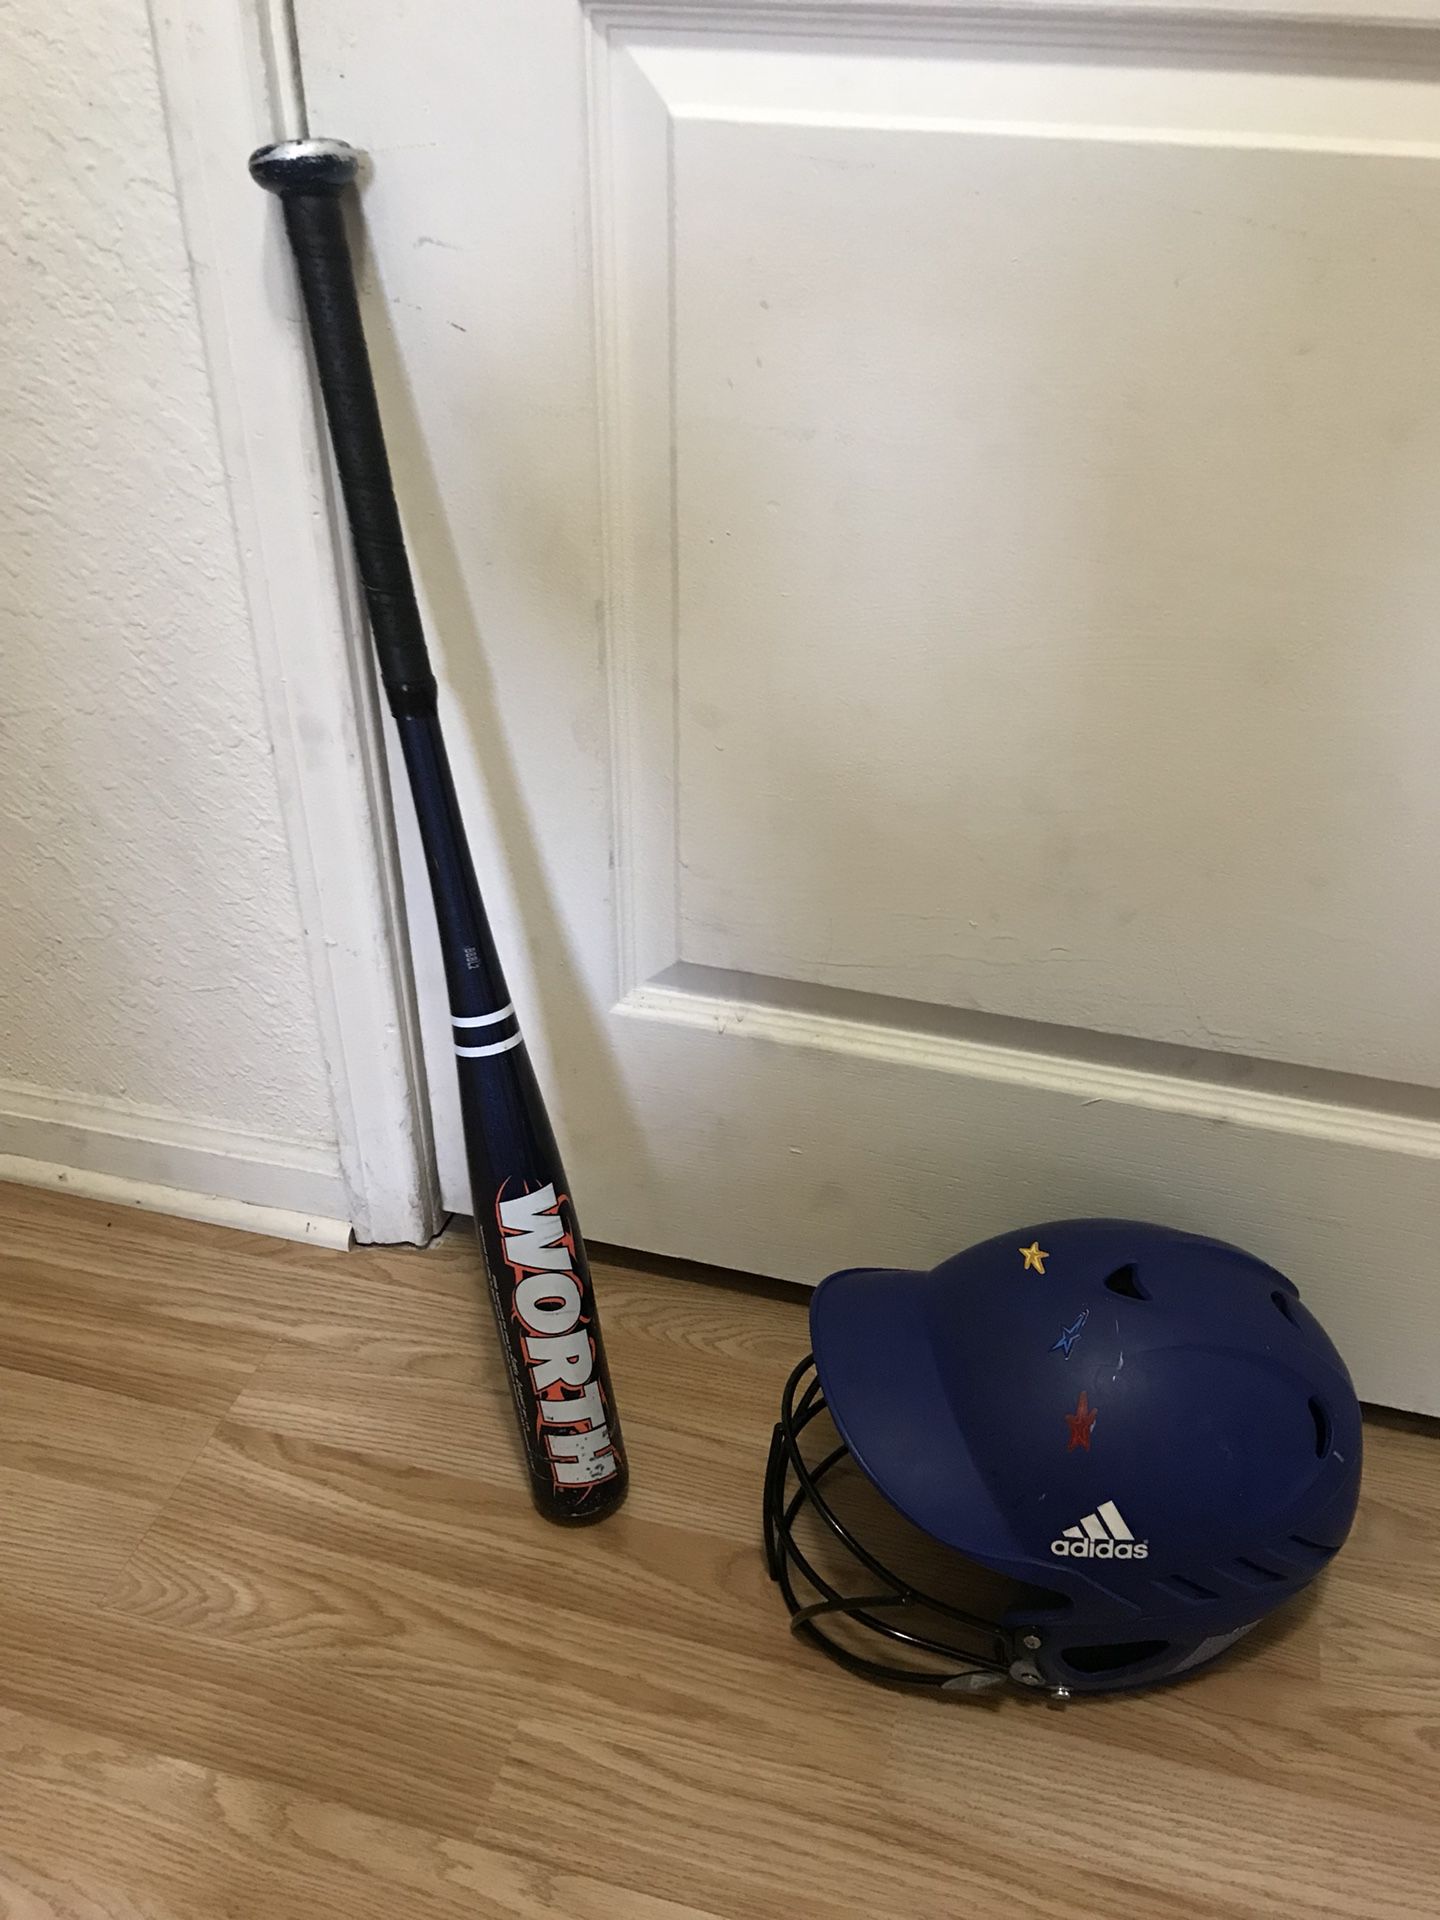 Dick’s Sporting goods baseball bat and helmet